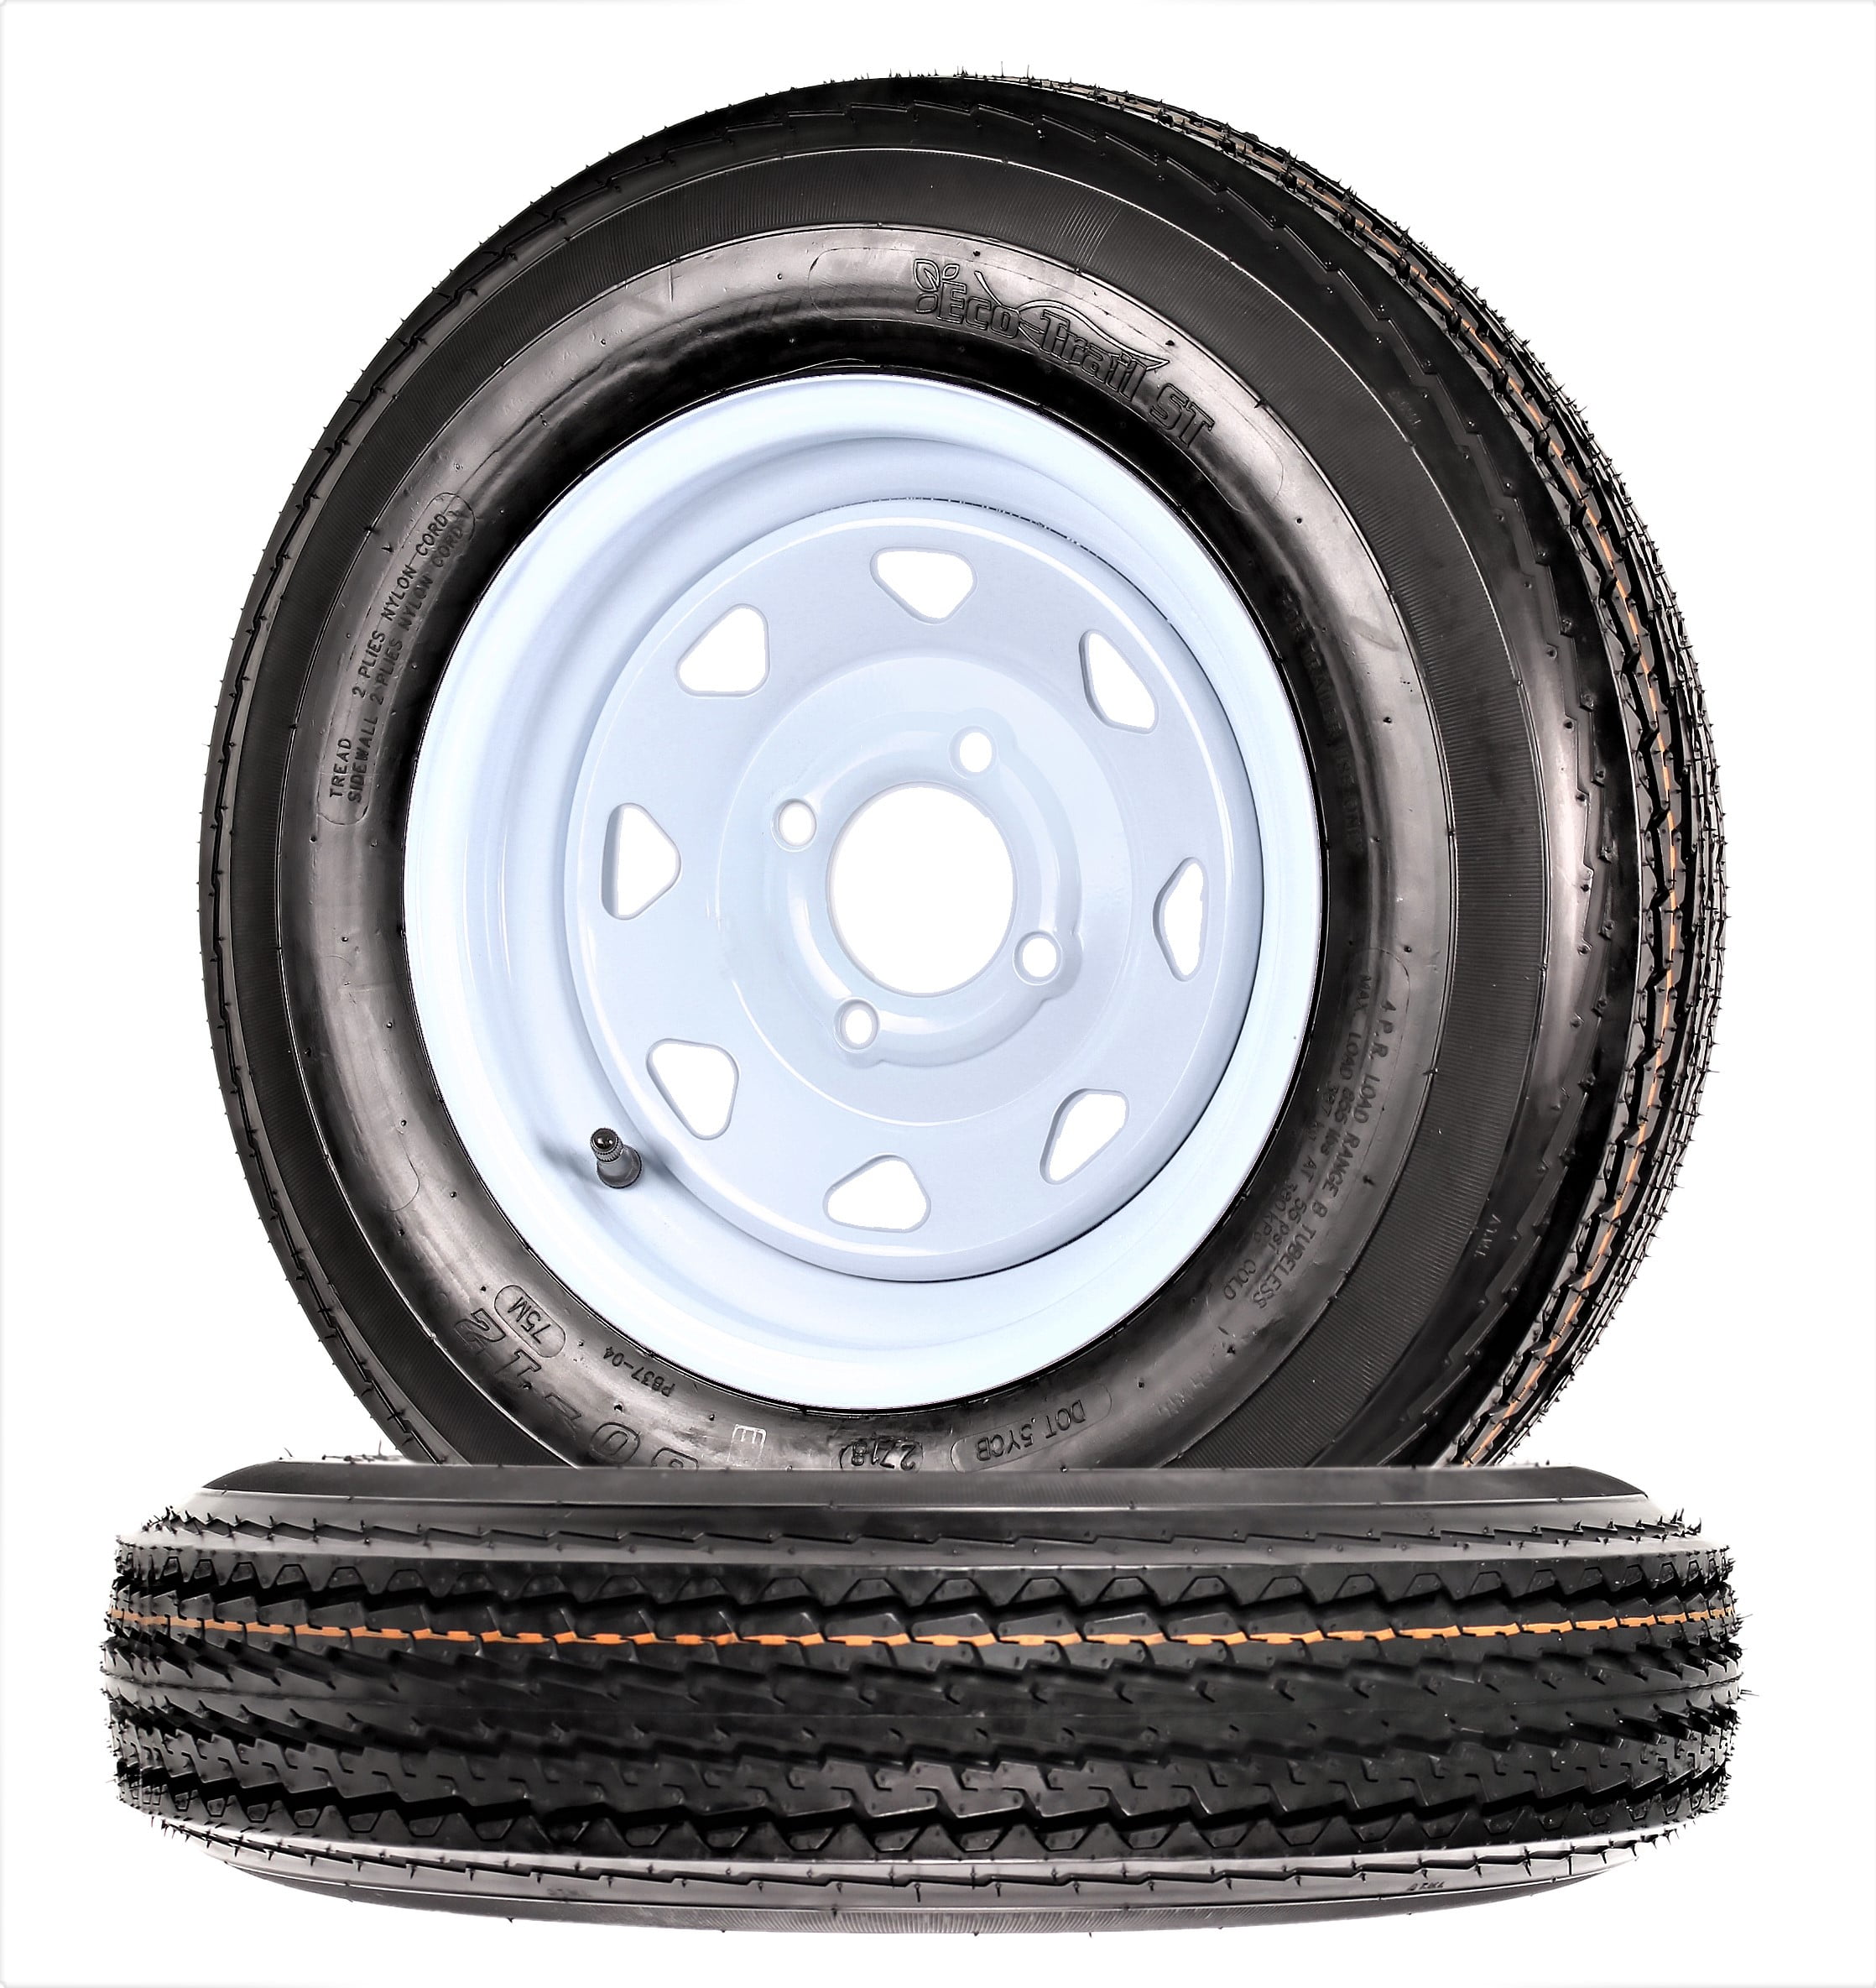 eCustomRim 2-Pack Trailer Tires On White Rims 530-12 5.30-12 5.30 x 12 Load C 4 Lug 